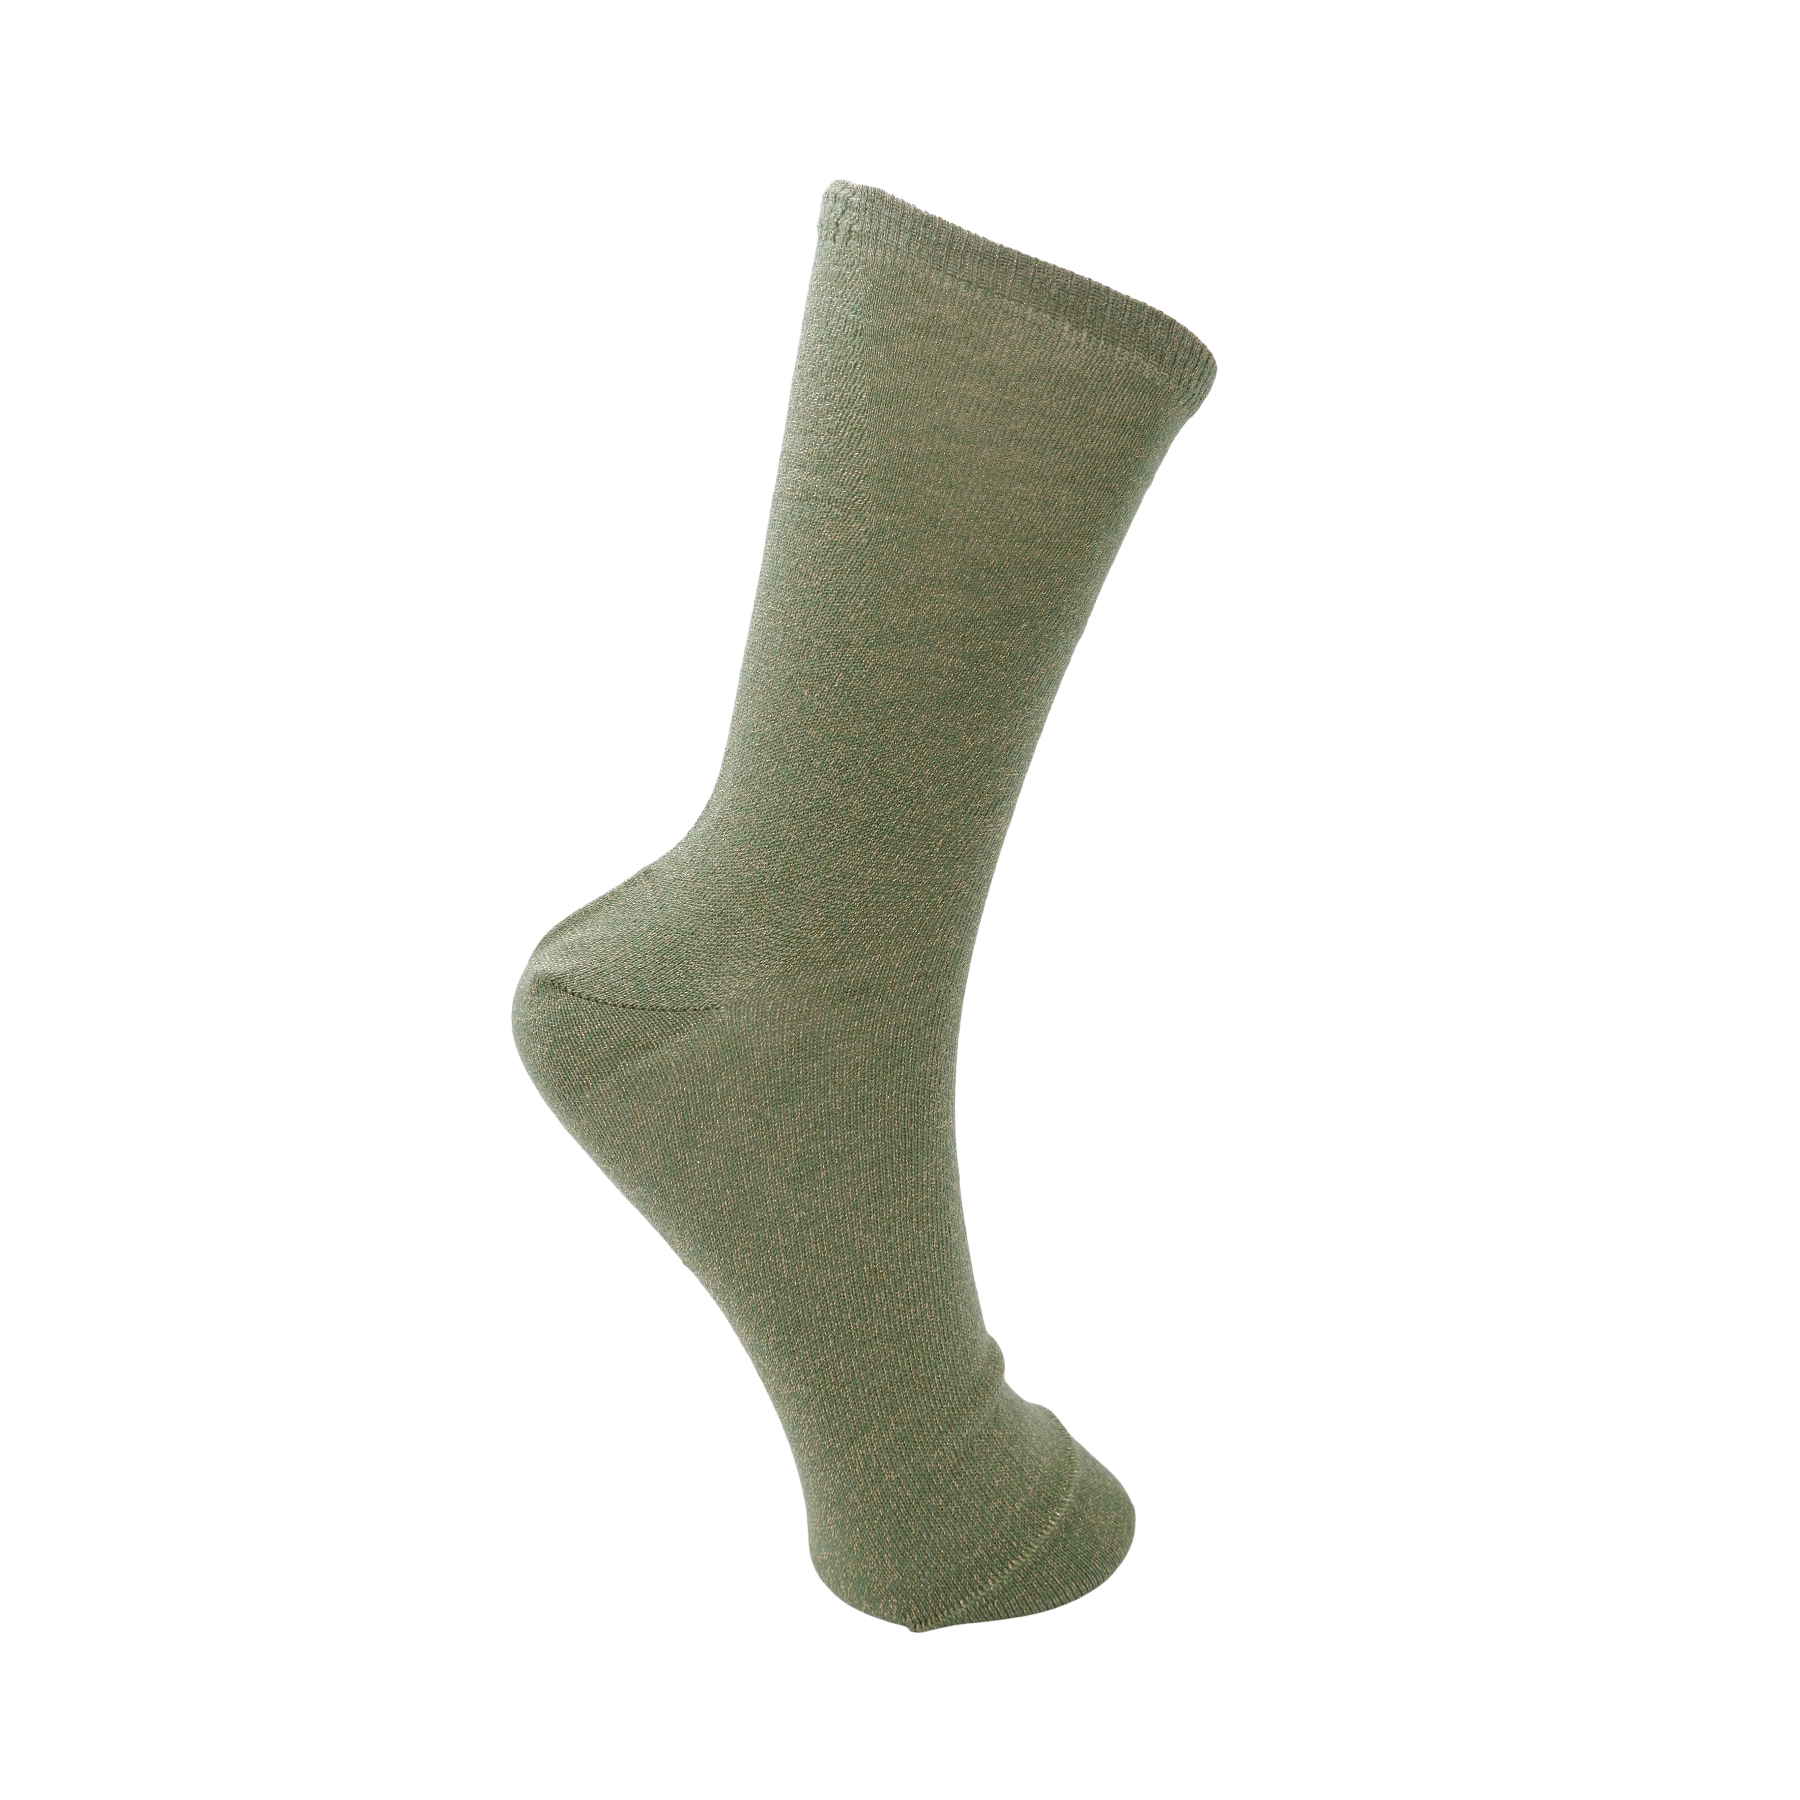 Piquant Green Lurex Socks by Black Colour